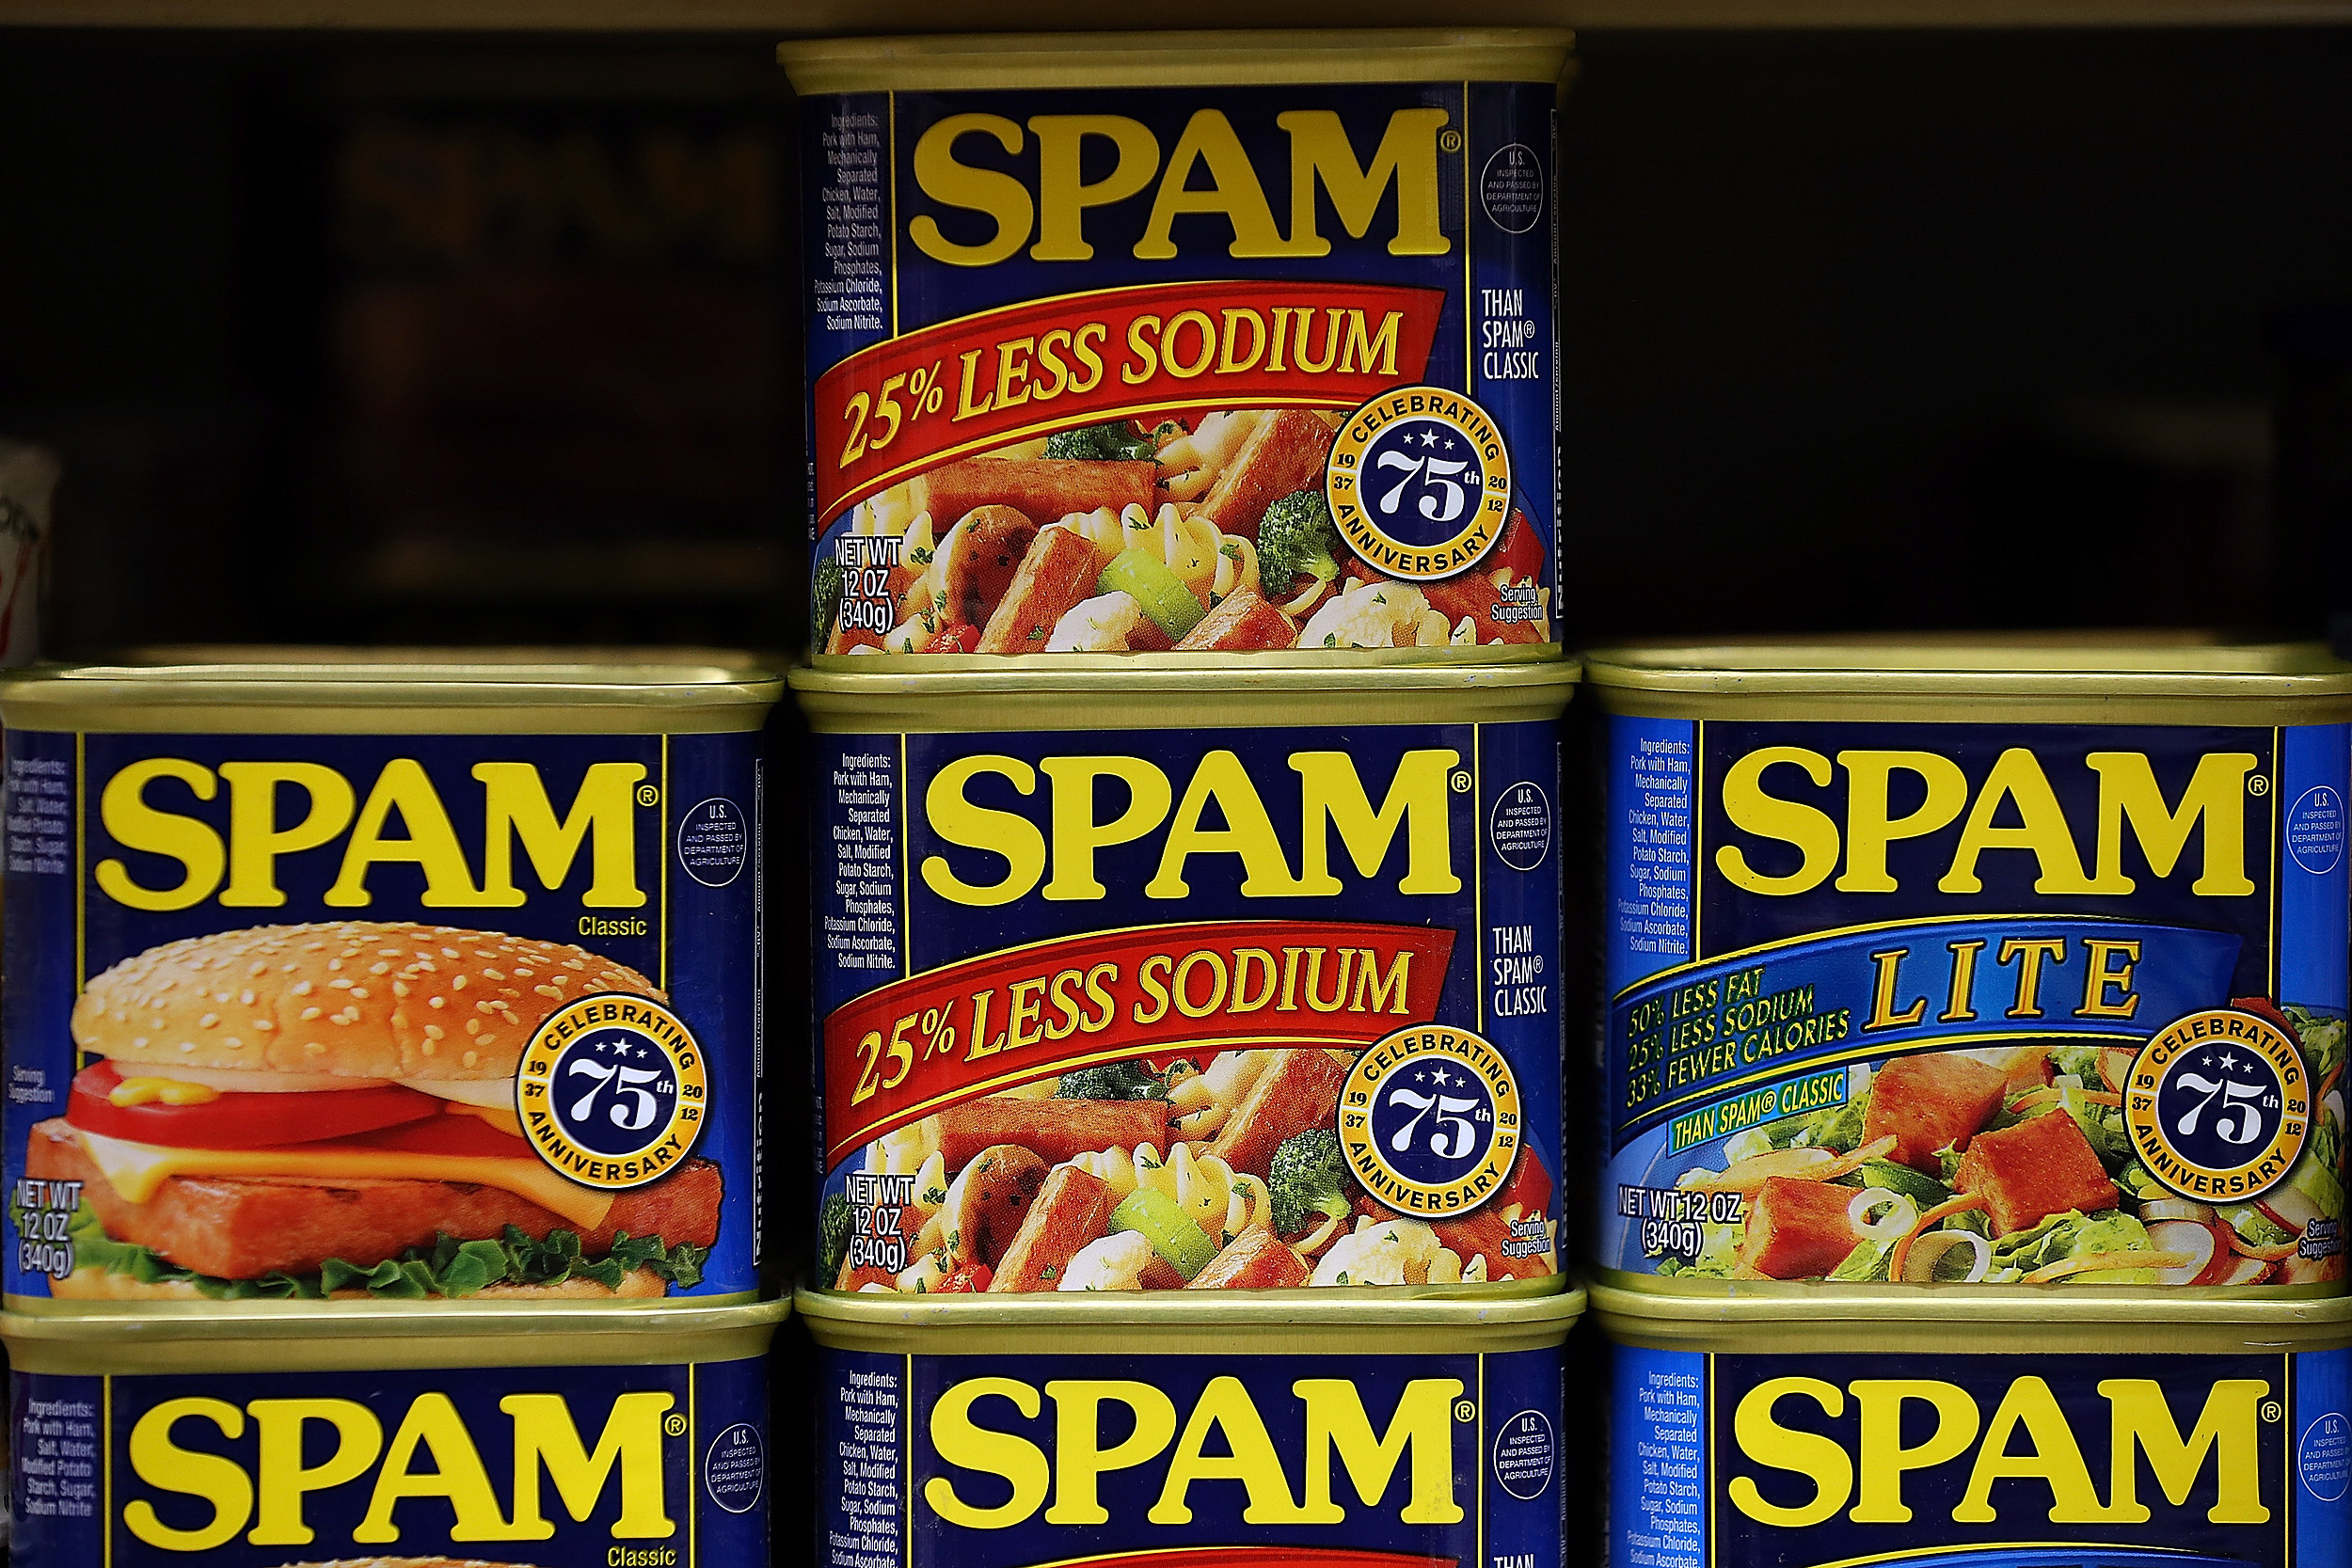 Hormel Foods announces new, sweet SPAM flavor -  5 Eyewitness News